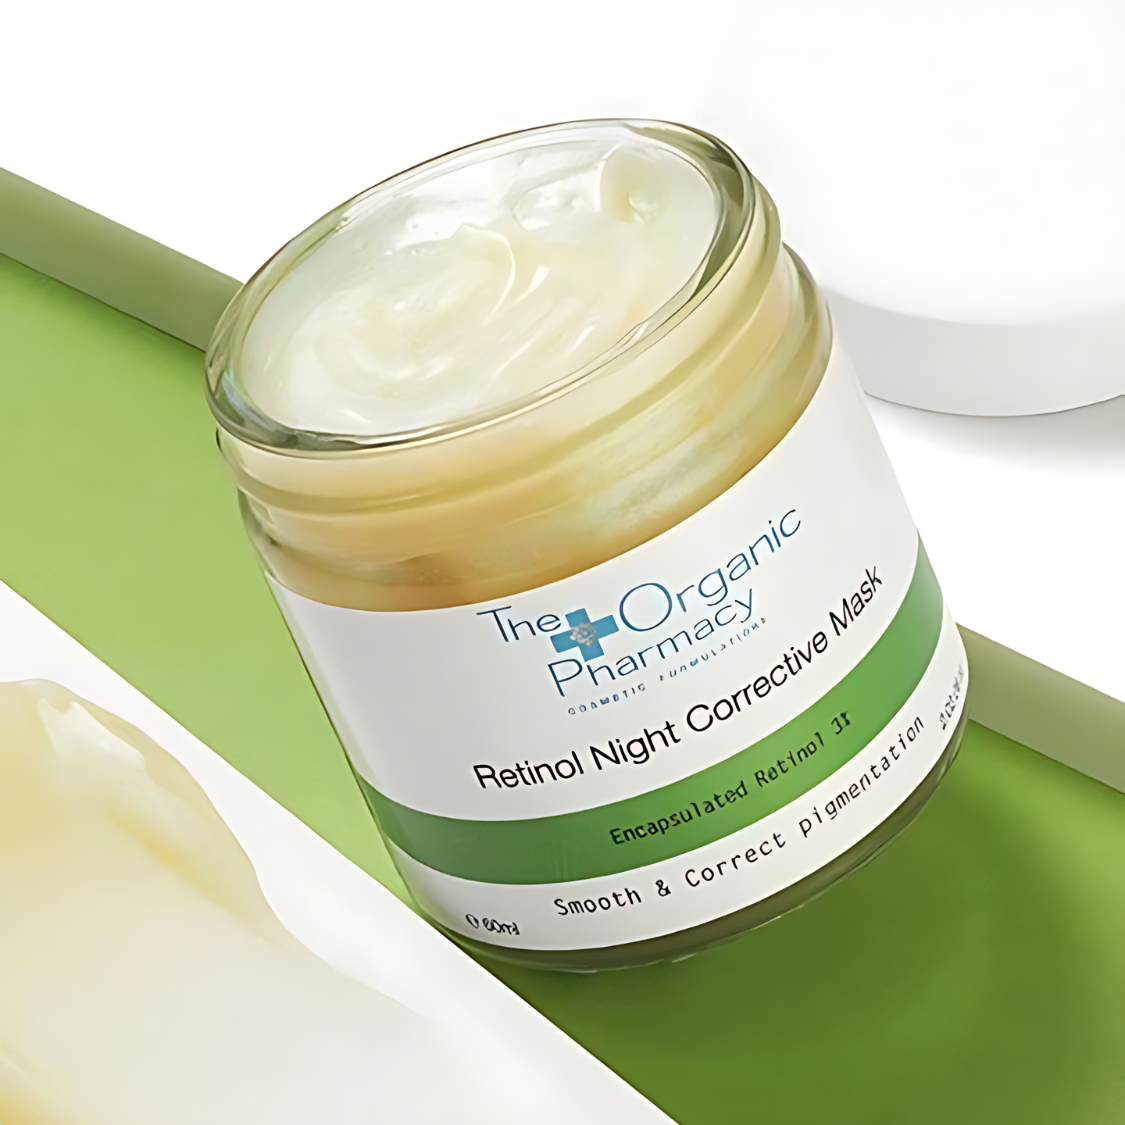 Organic Skin Care Products UK